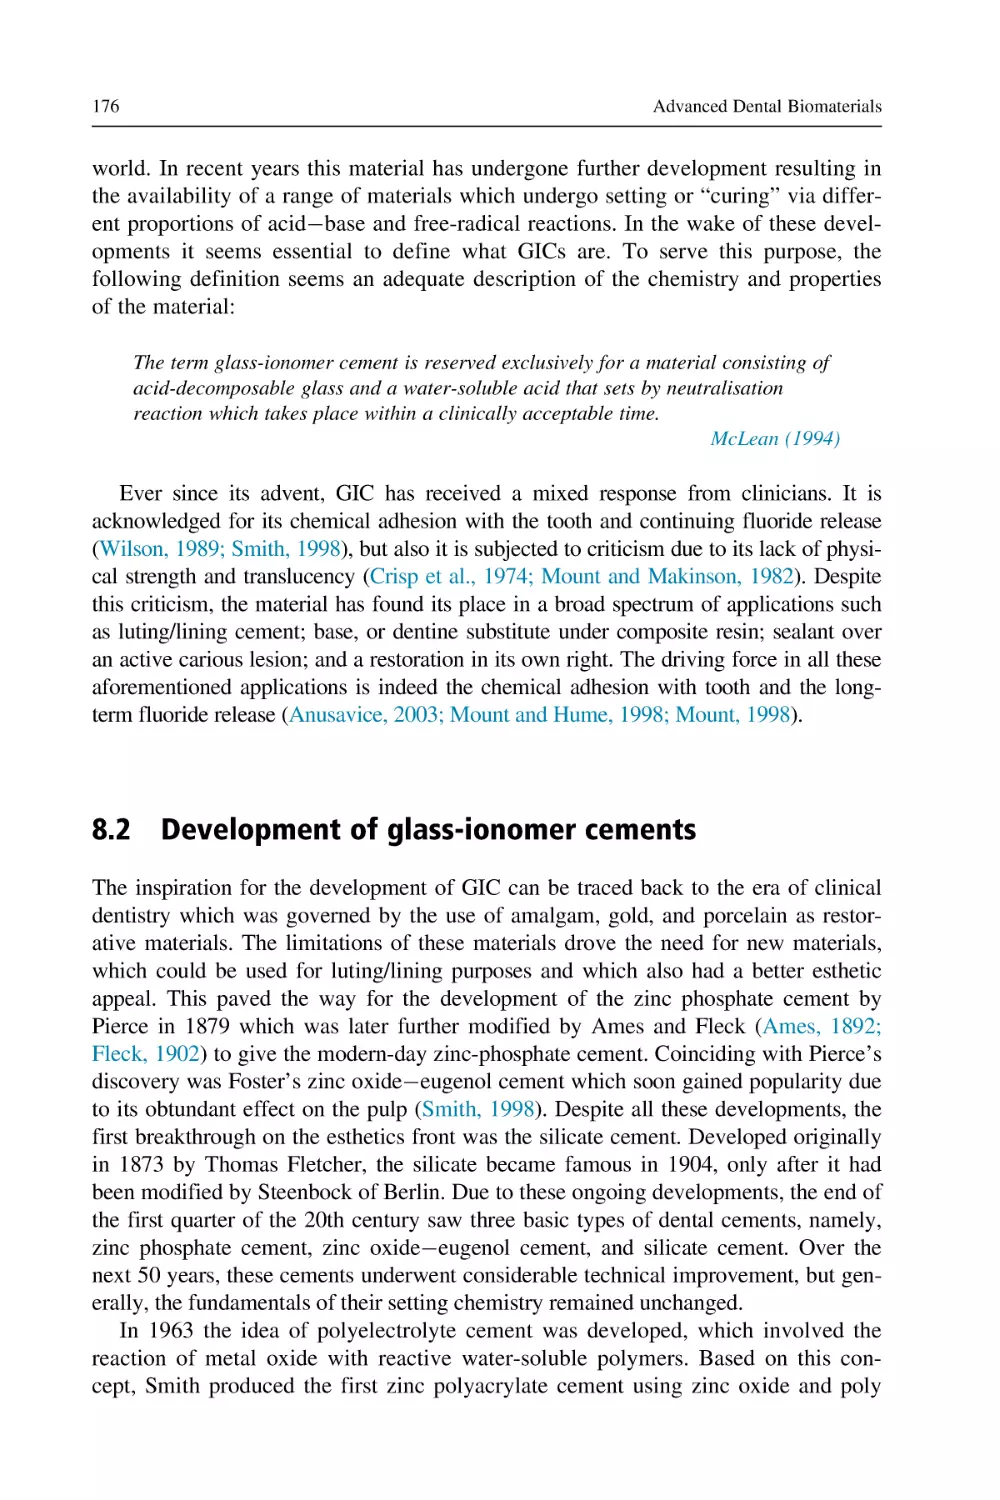 8.2 Development of glass-ionomer cements